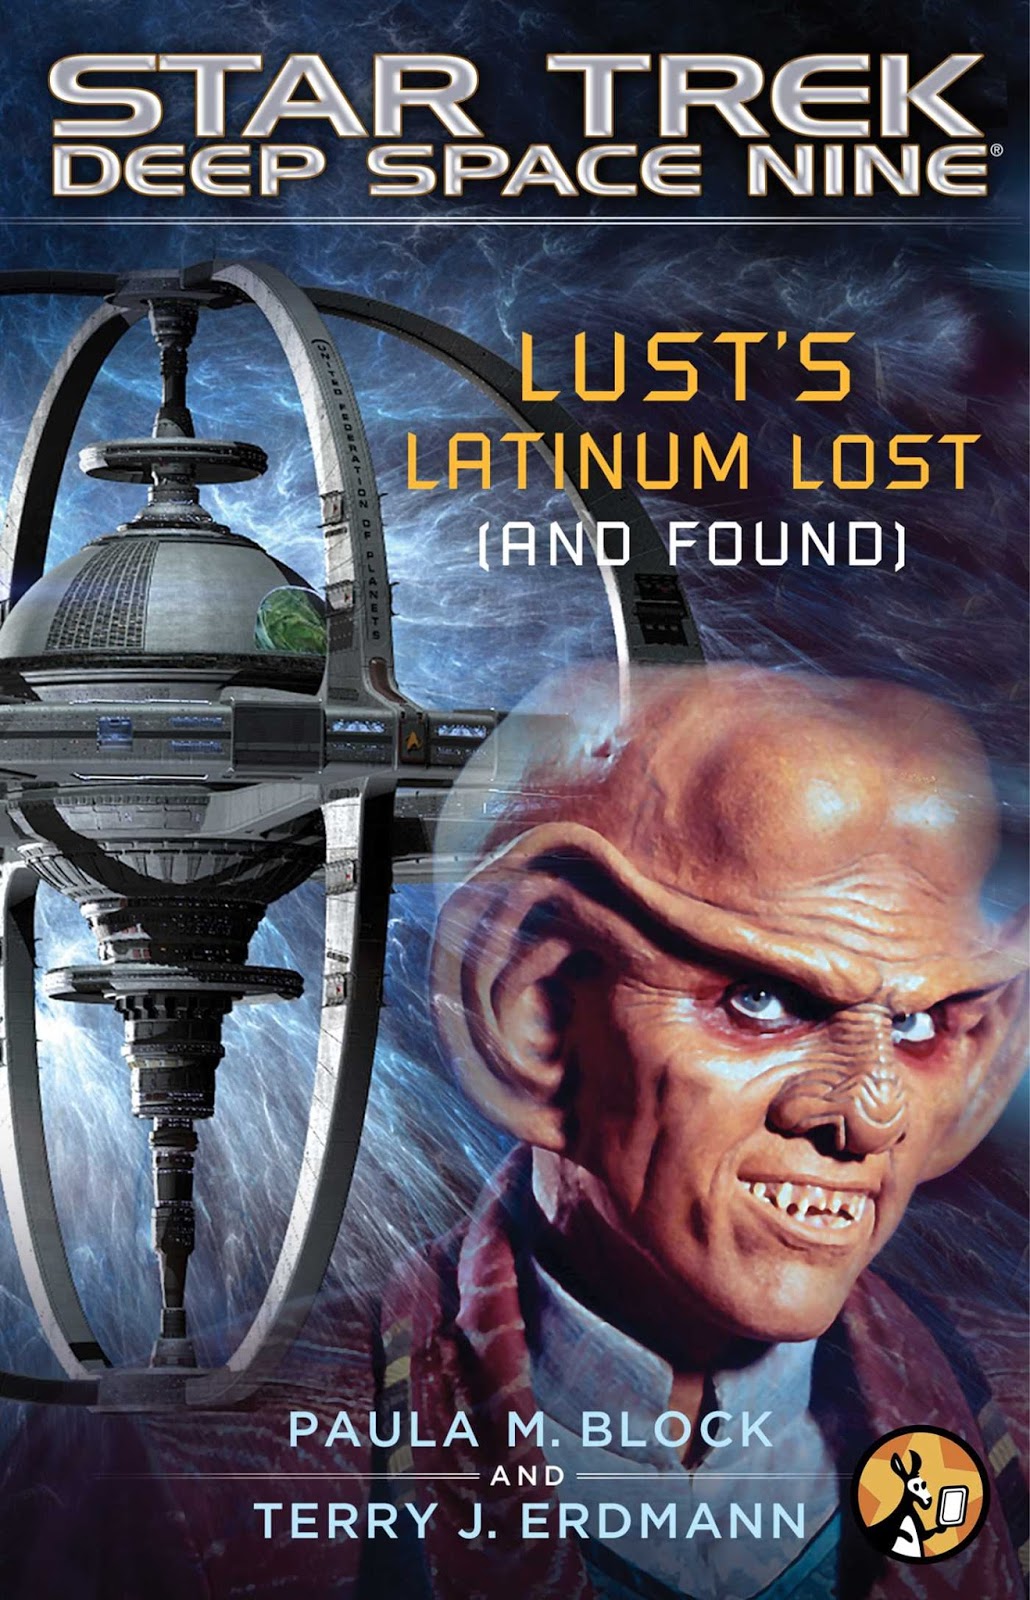 “Star Trek: Deep Space Nine: Lust’s Latinum Lost” Review by Unreality-sf.net